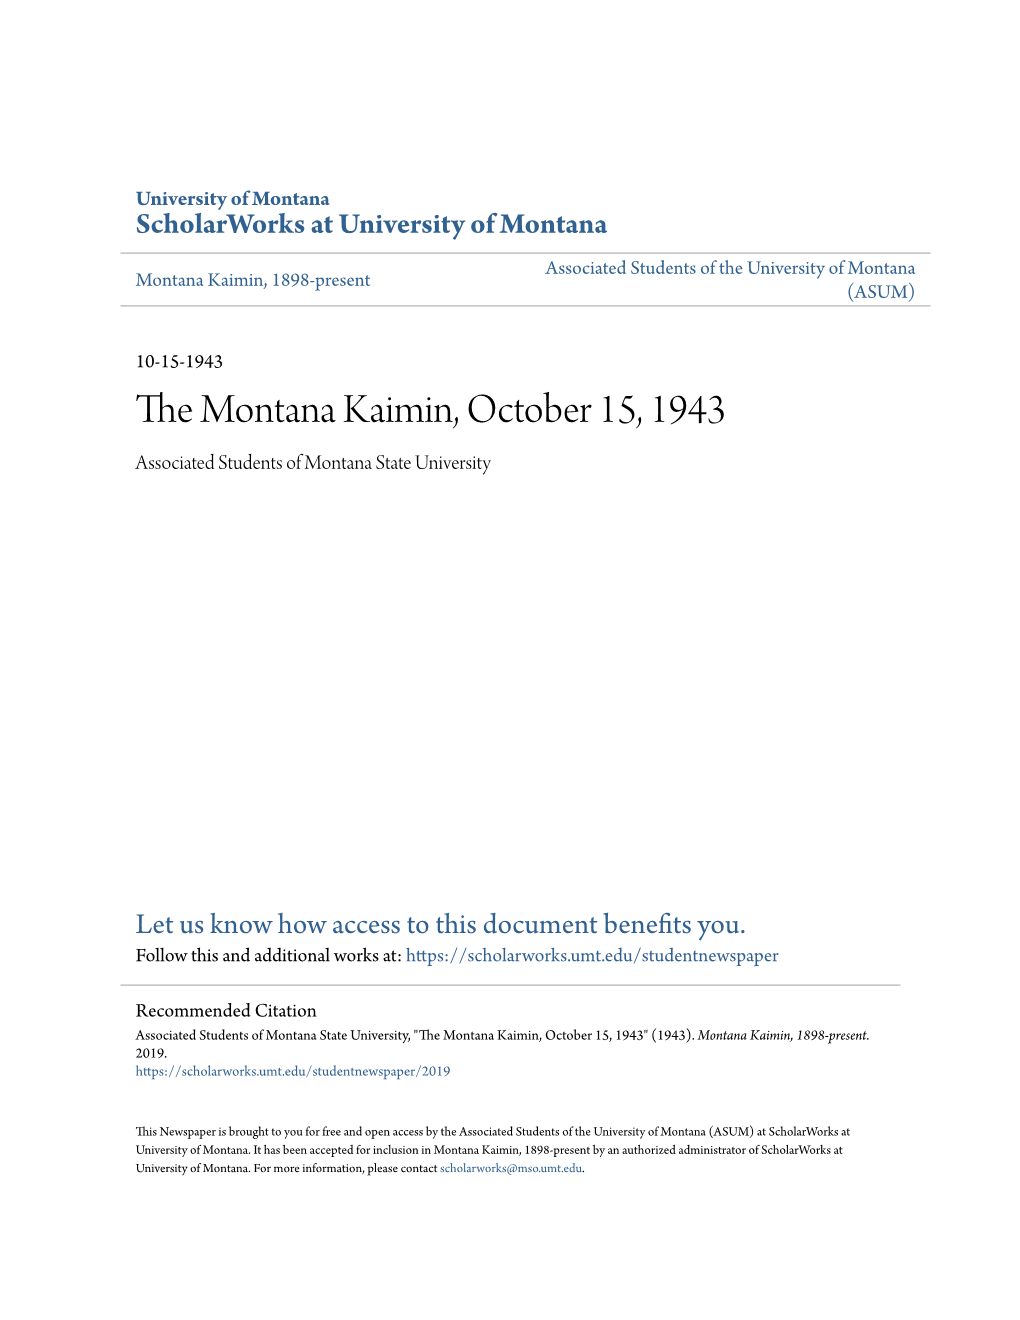 The Montana Kaimin, October 15, 1943